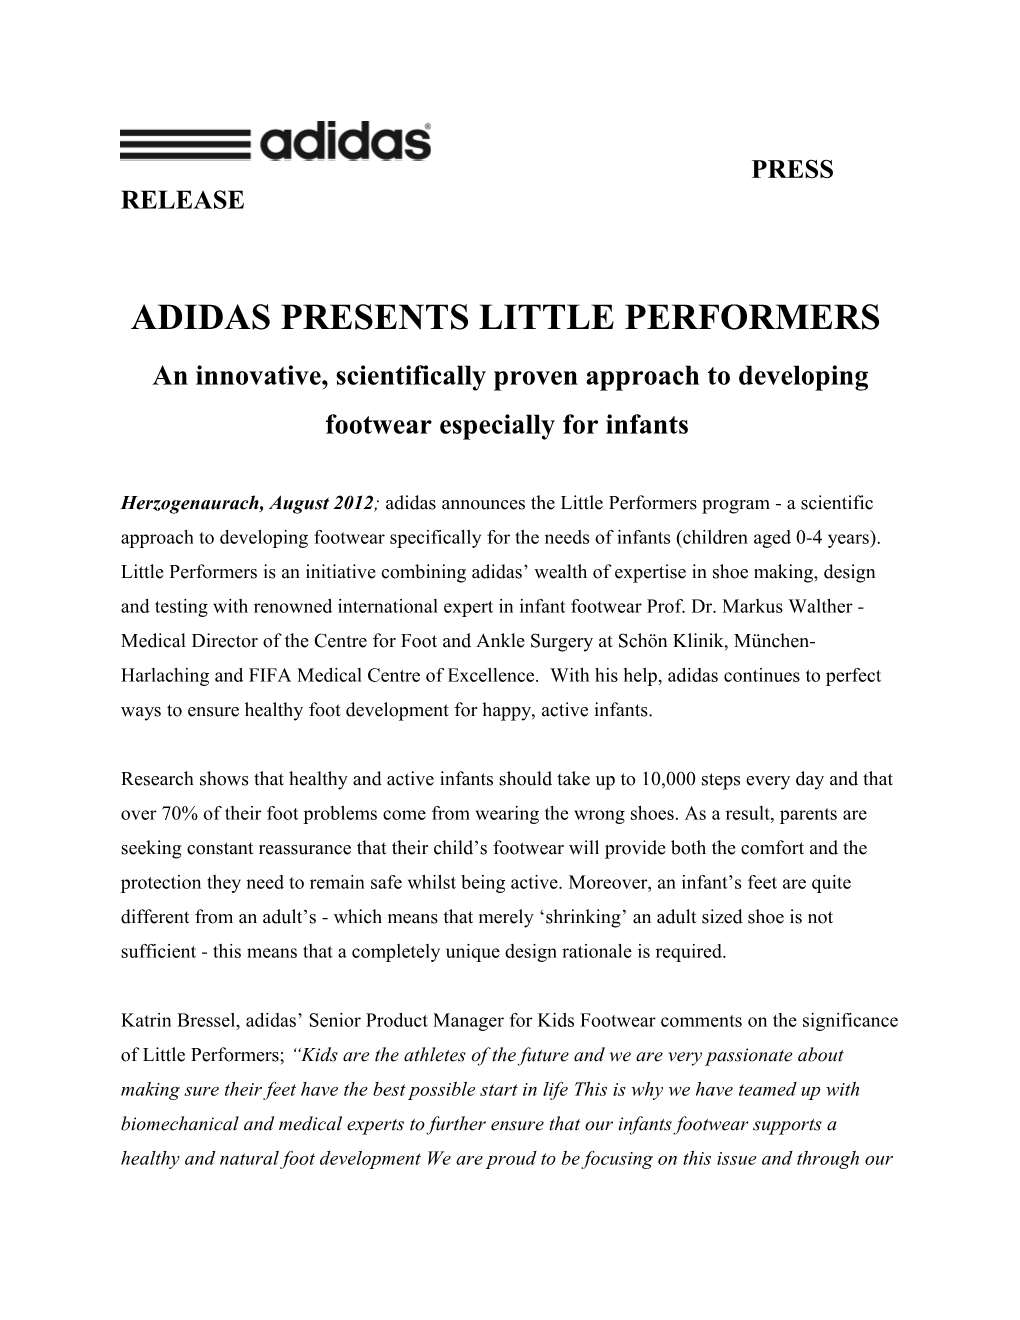 adidas press release